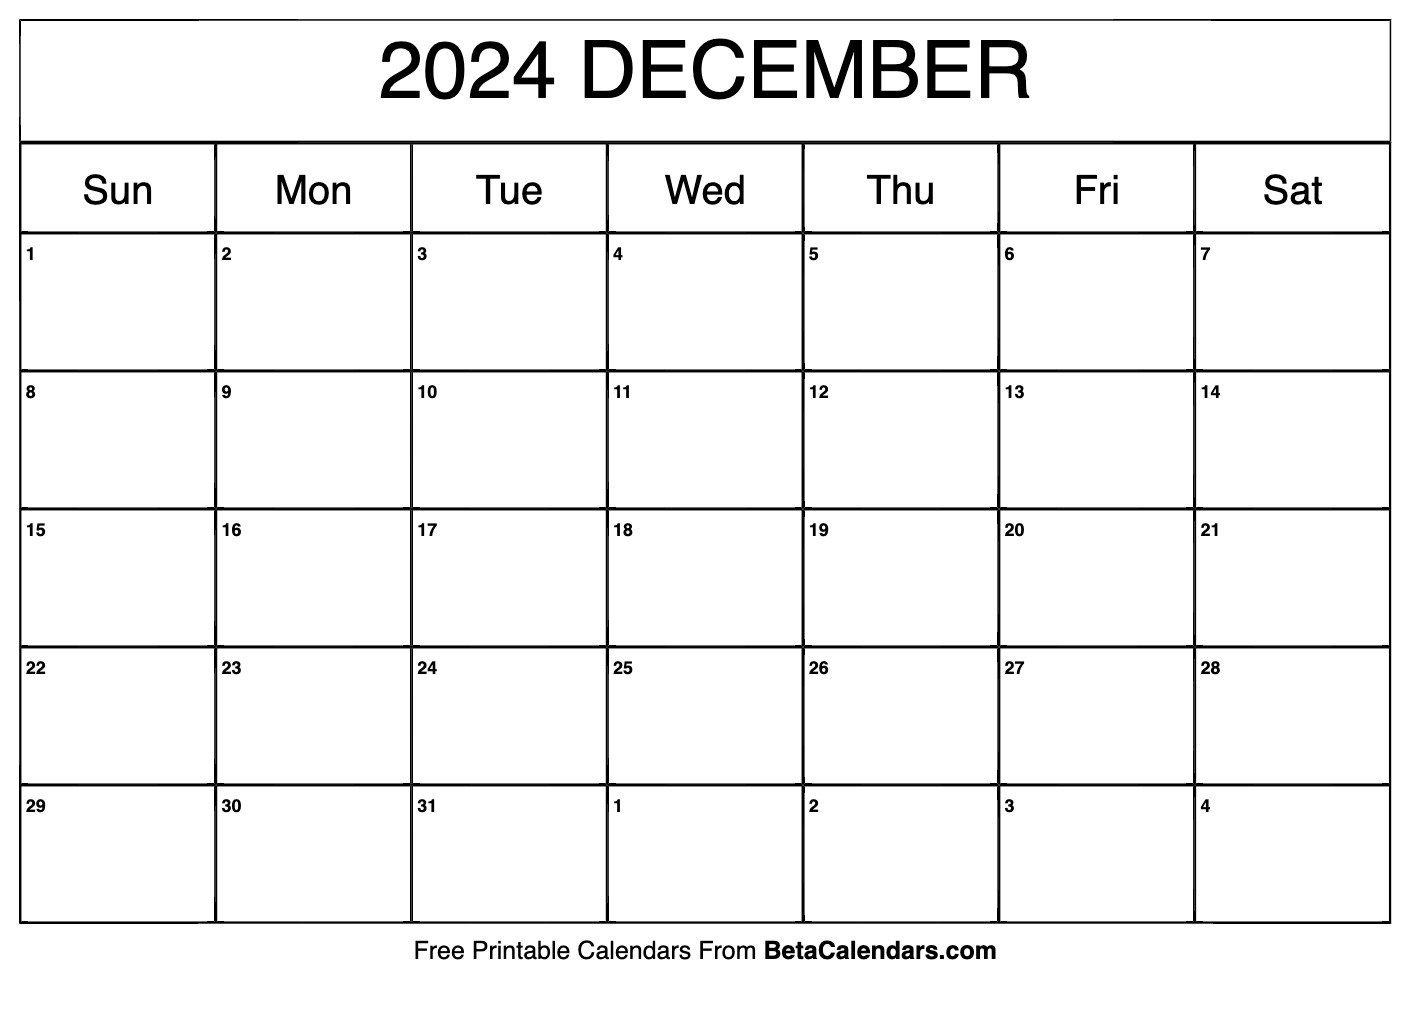 Free Printable December 2024 Calendar pertaining to Free Printable Calendar 2024 November December Christmas